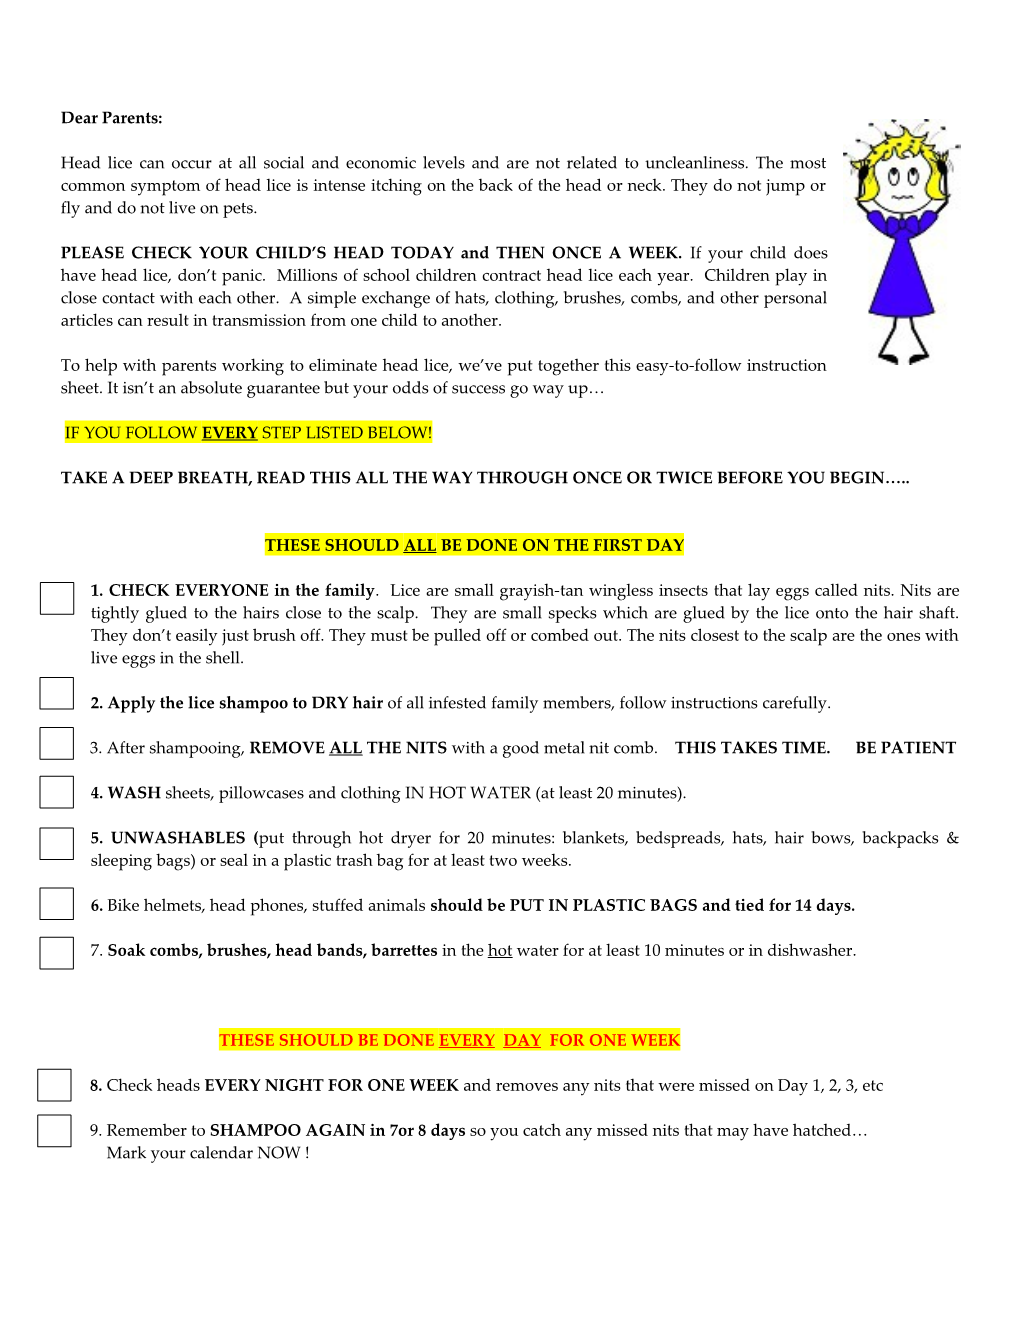 Parent Instruction Sheet For